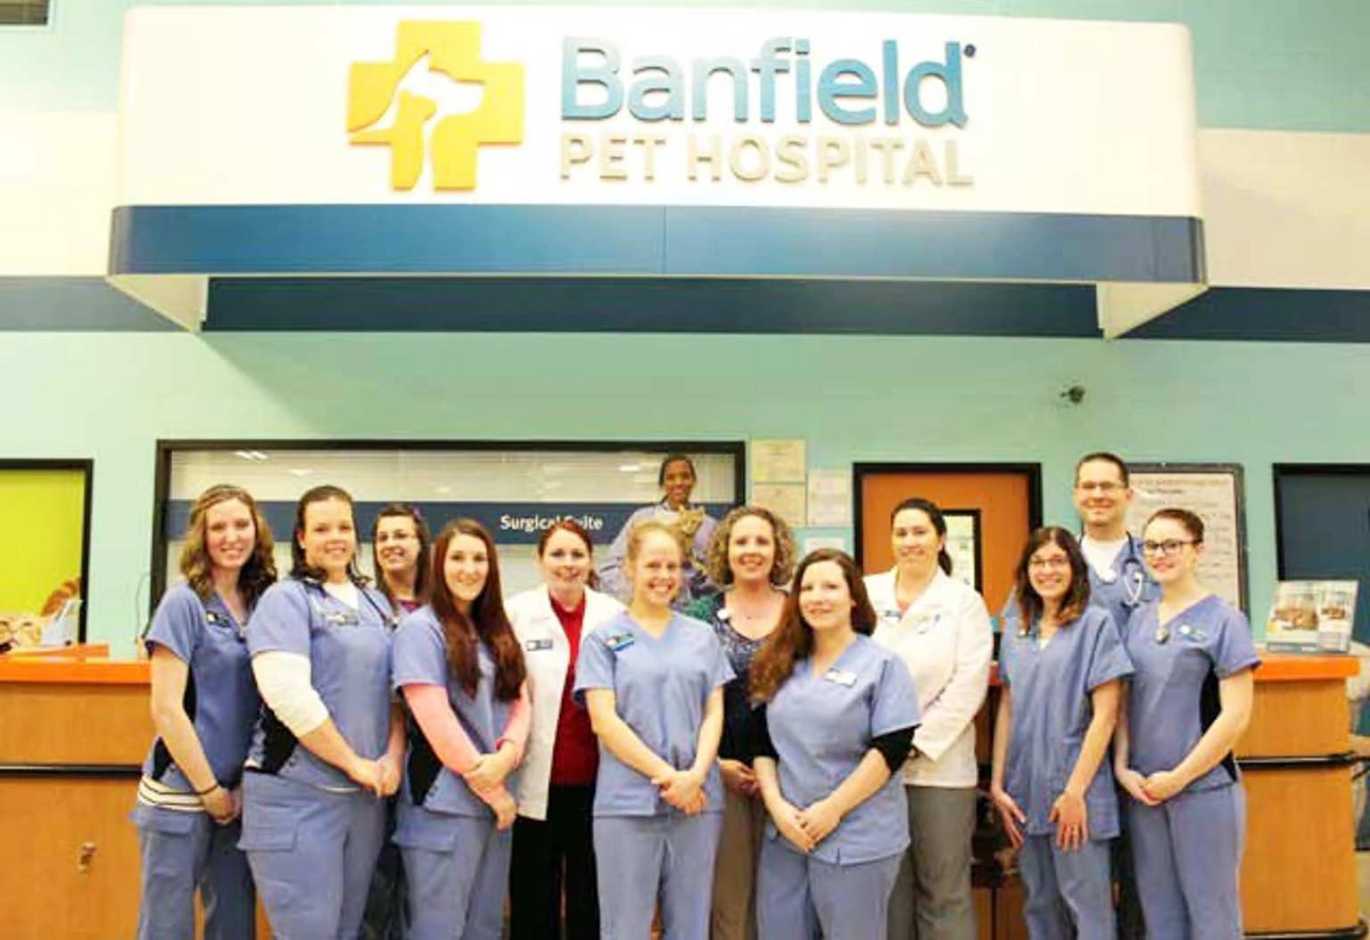 Un grupo de asociados Banfield en el centro Banfield Pet Hospital de Alcoa, Tennessee